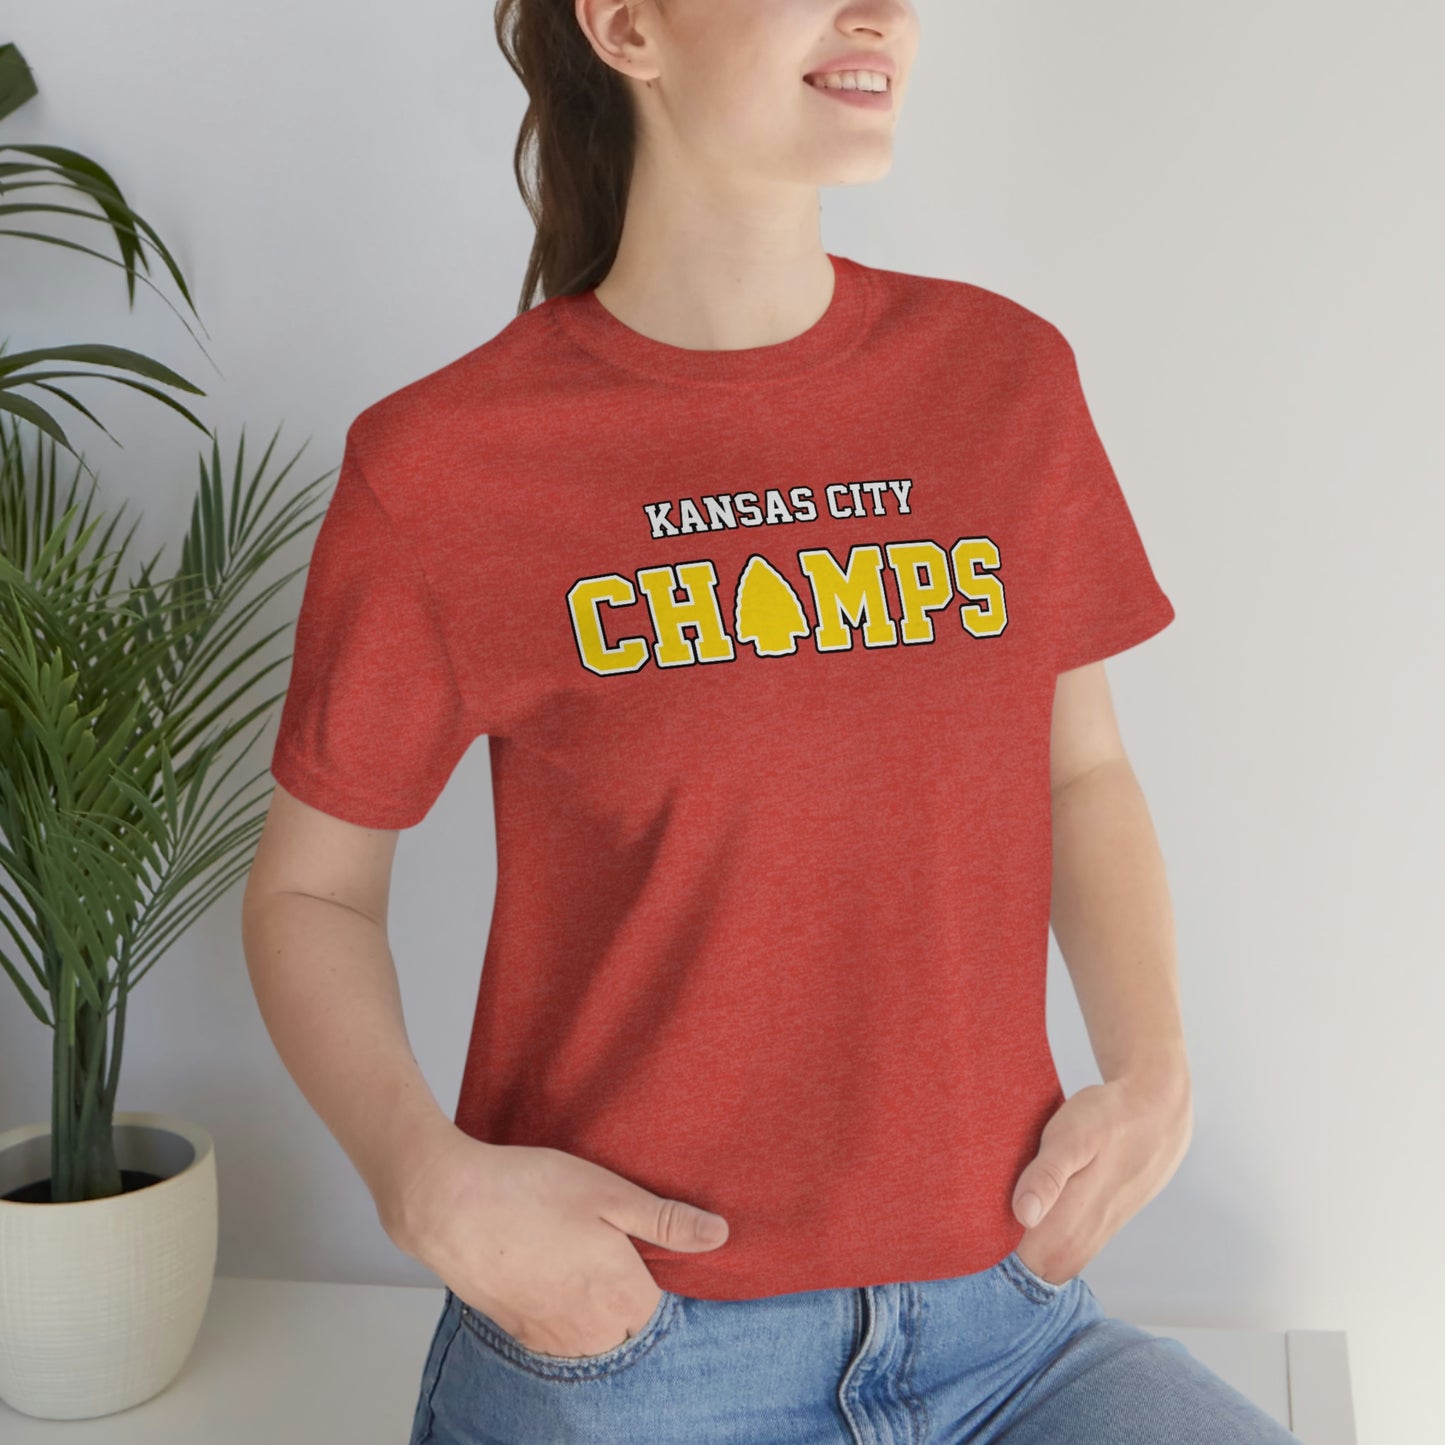 Kansas City CHAMPS – Tee Shirt – Red